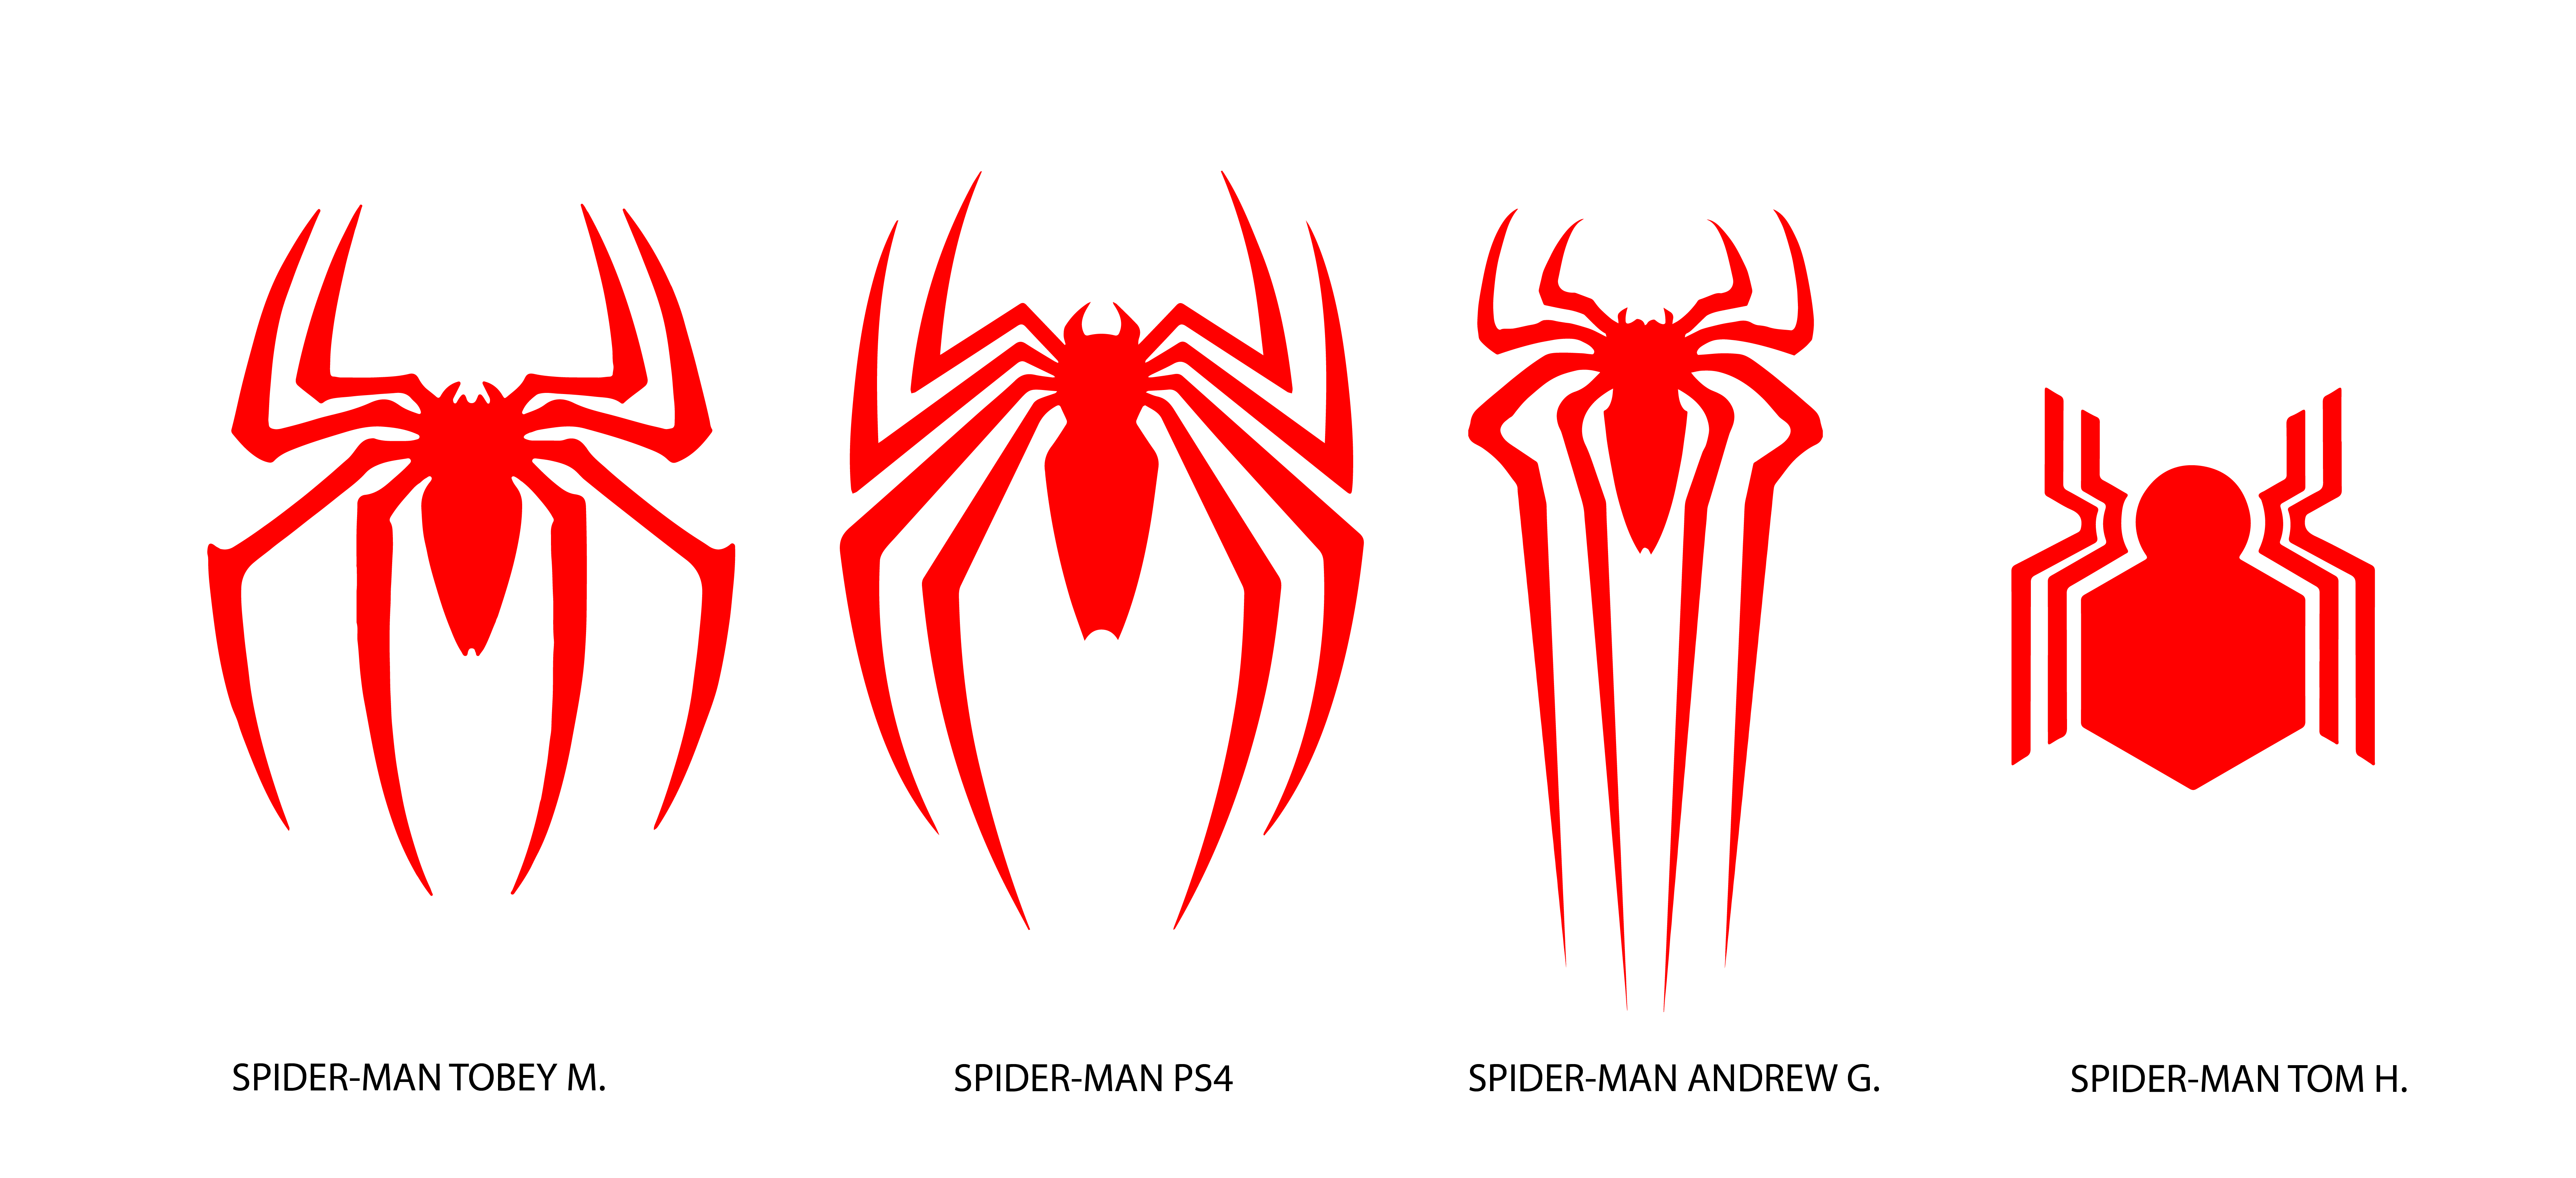 Spiderman Logo - SPIDER-MAN LOGO COMPARISON WHICH ONE IS YOUR FAVORITE ? : SpidermanPS4